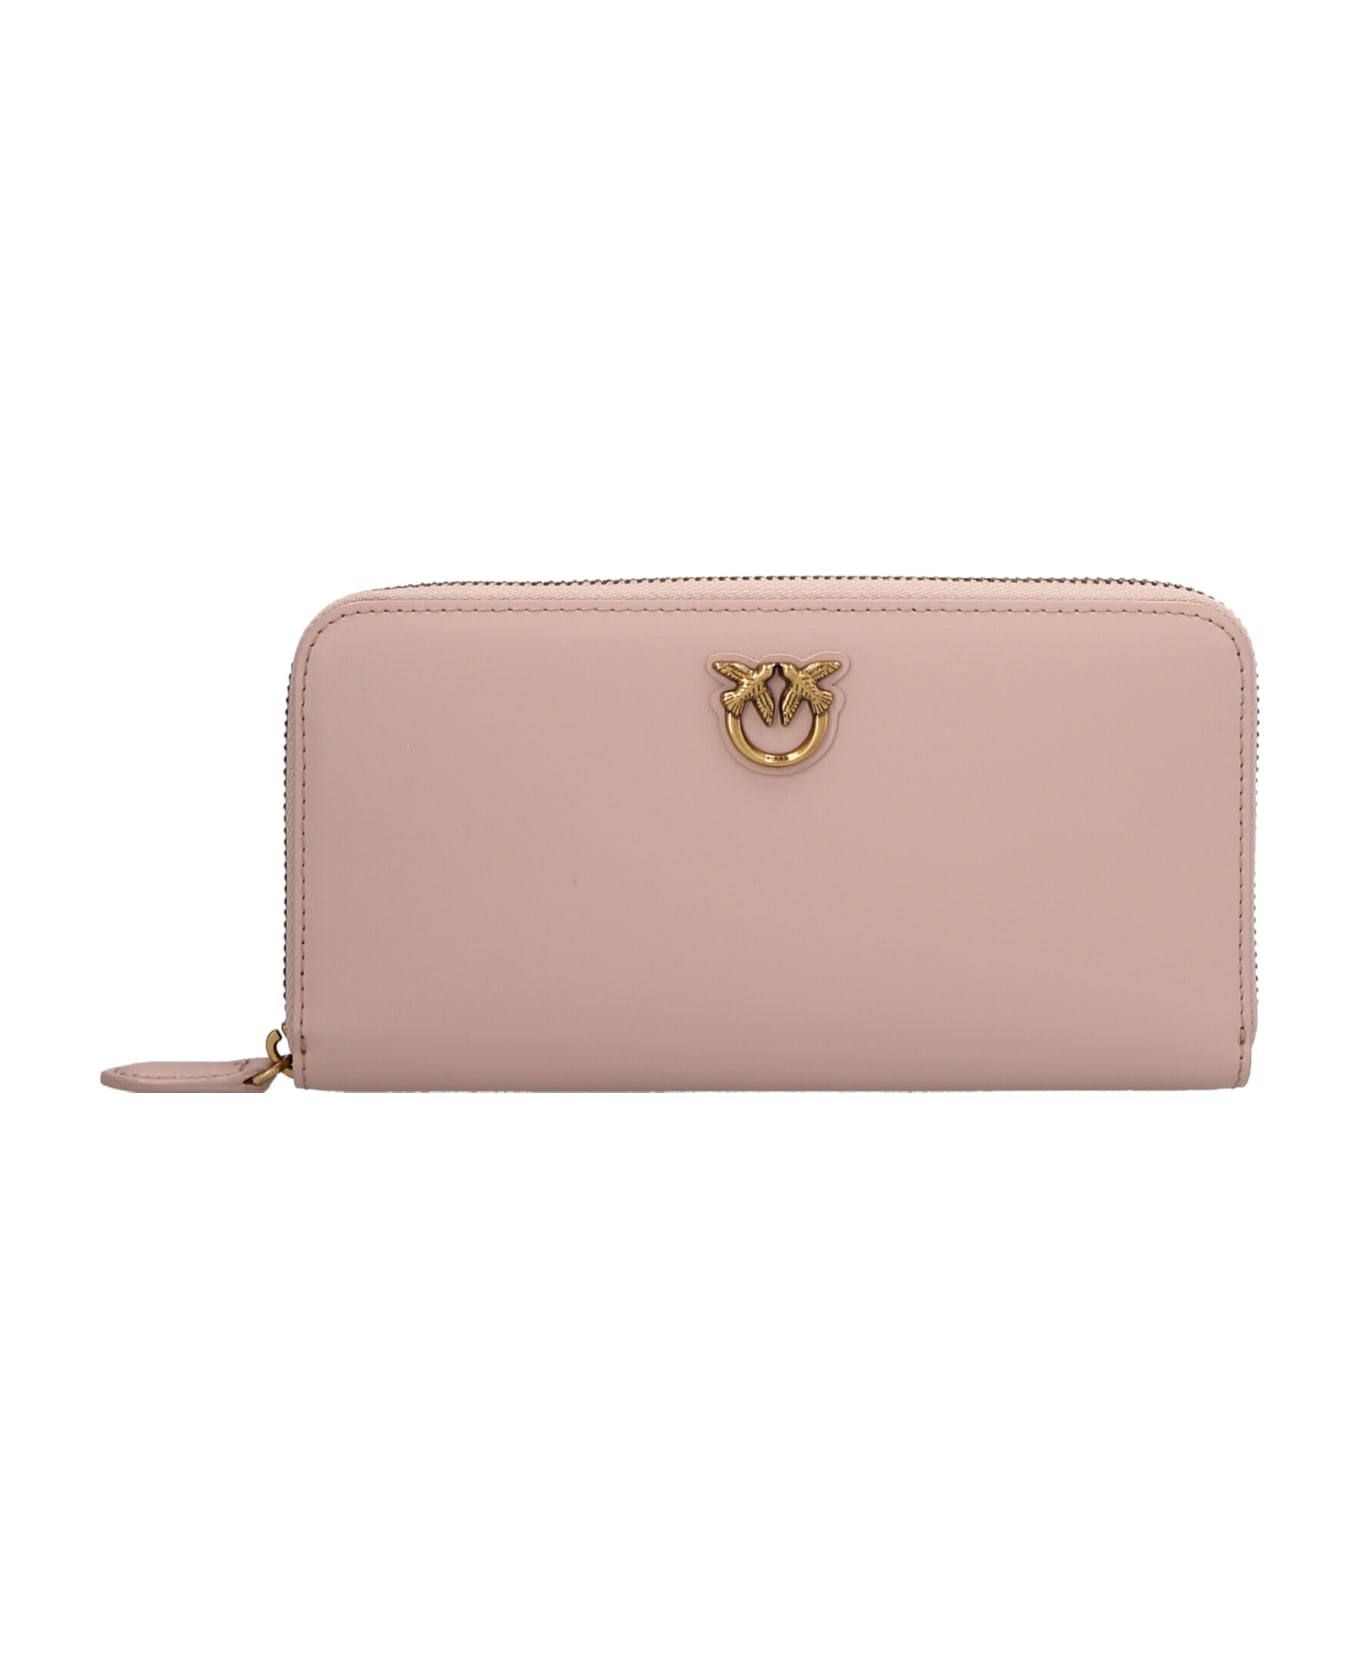 Pinko Zip Around Wallet - Pale pink 財布